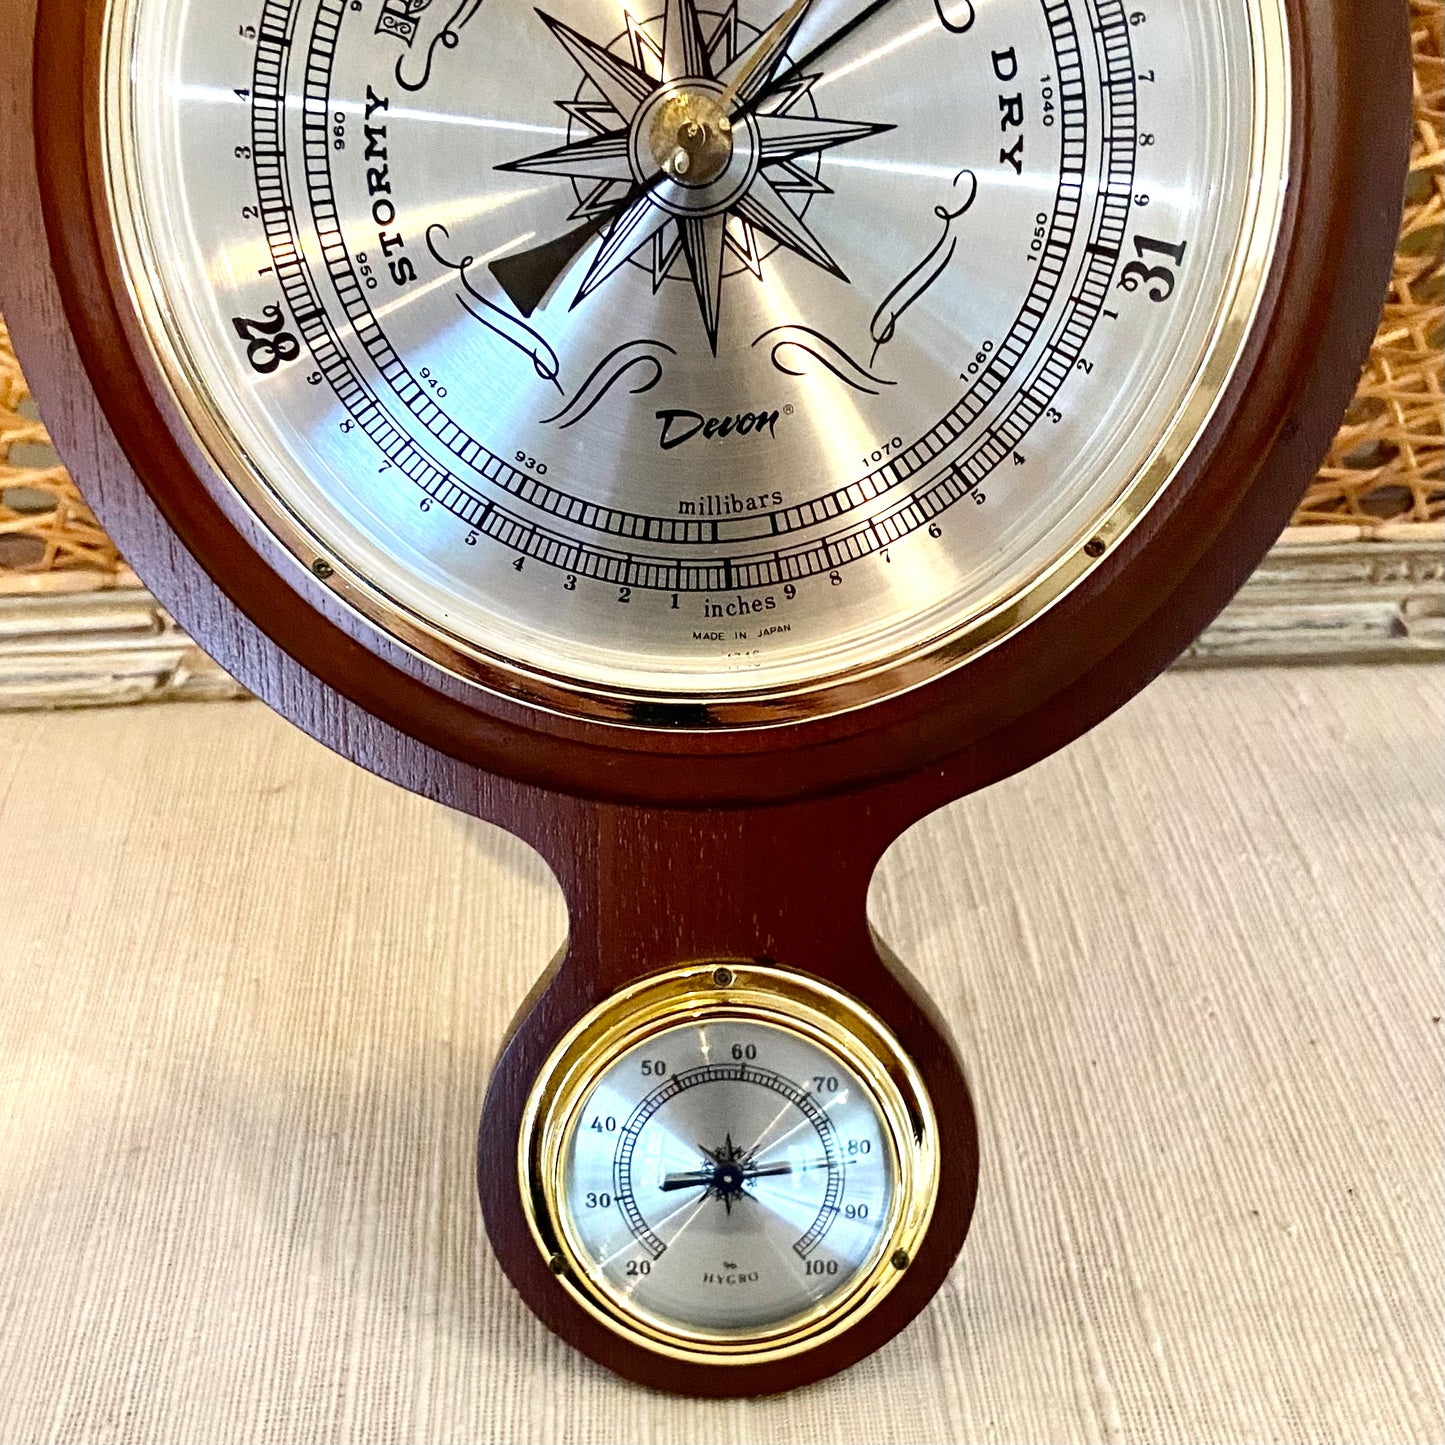 Vintage coastal chic  Brass & wood wall barometer